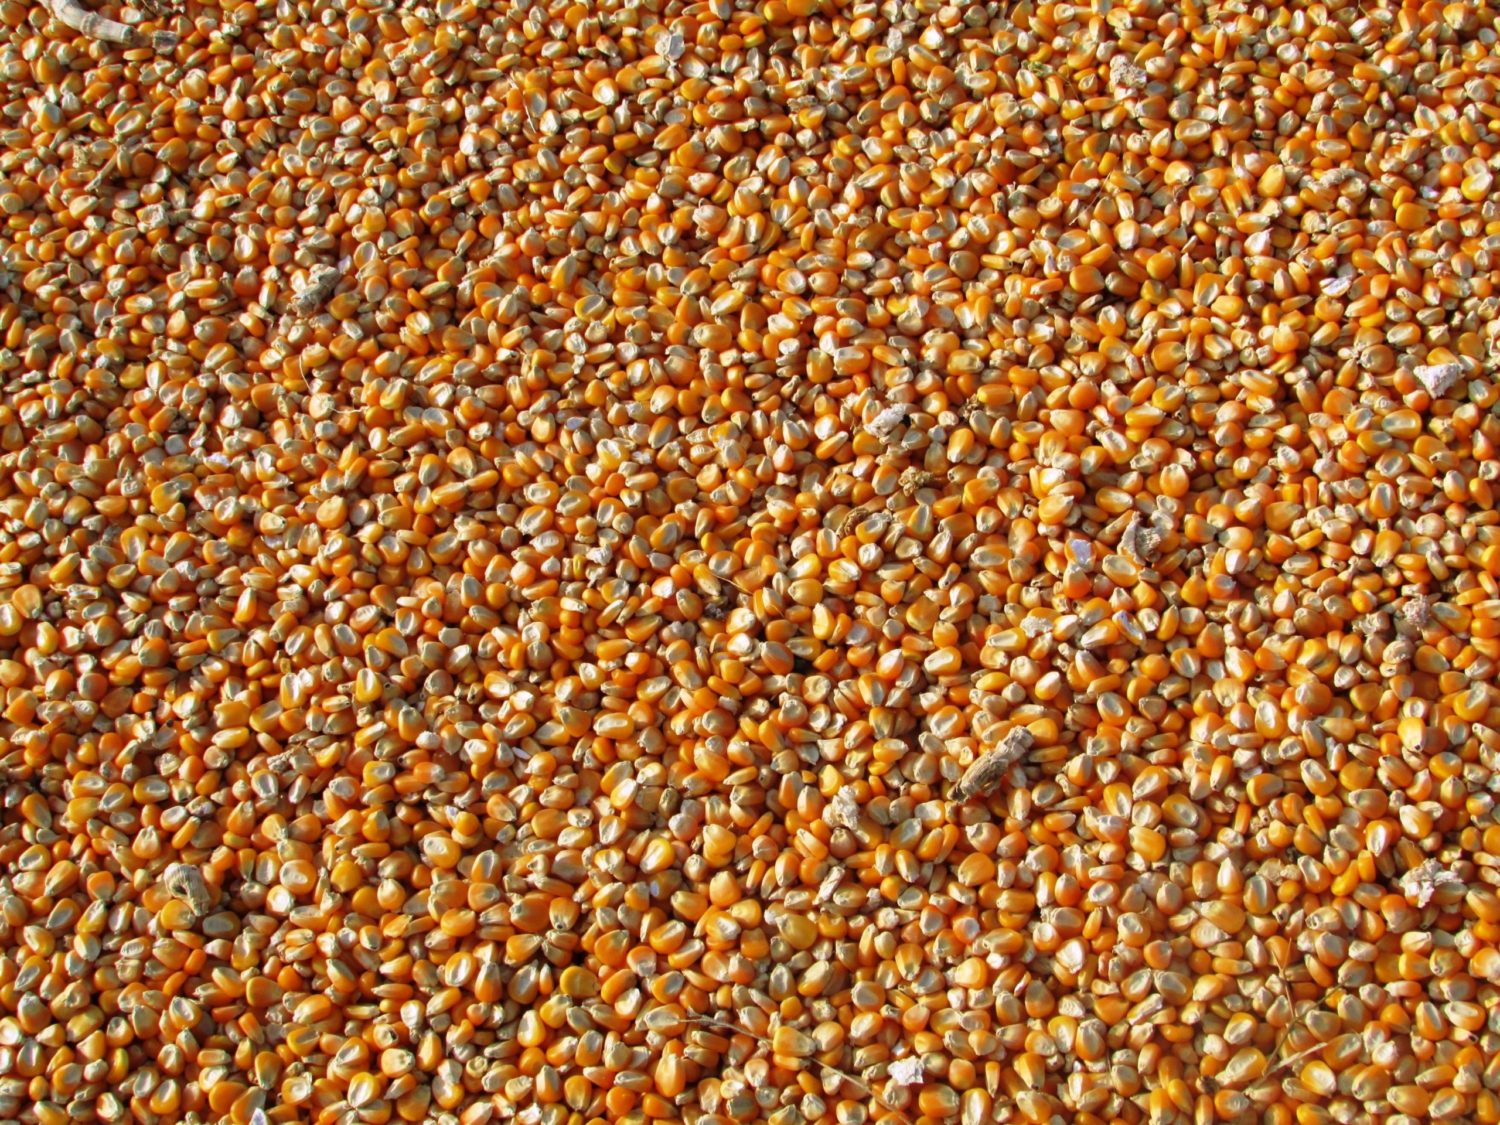 photo of thousands of golden corn kernels